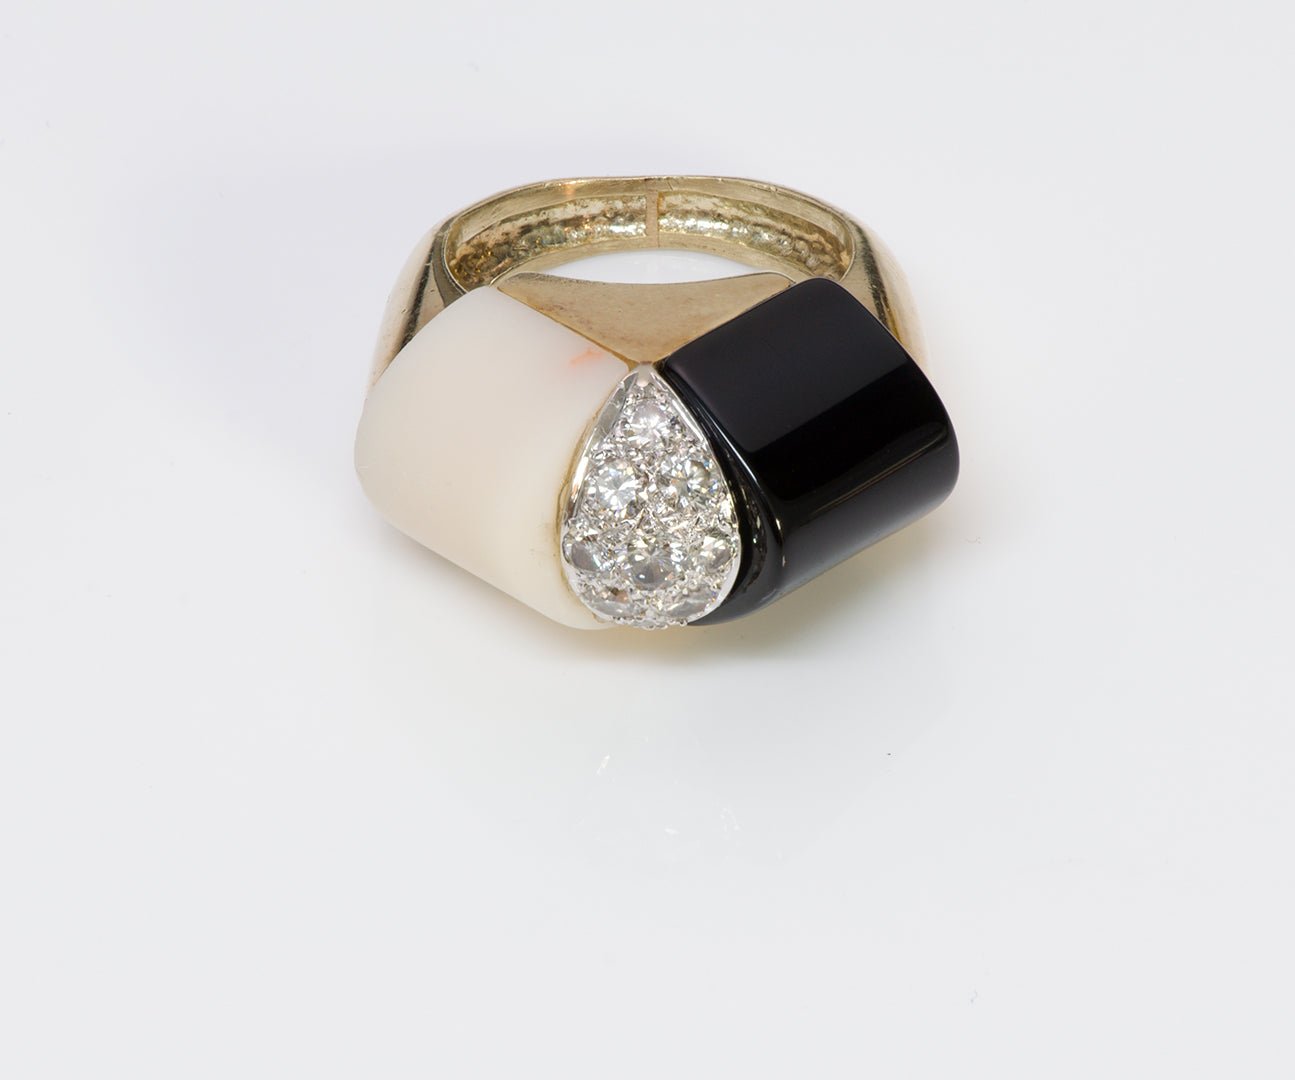 Vintage 14K Gold La Triomphe Onyx Coral Diamond Ring